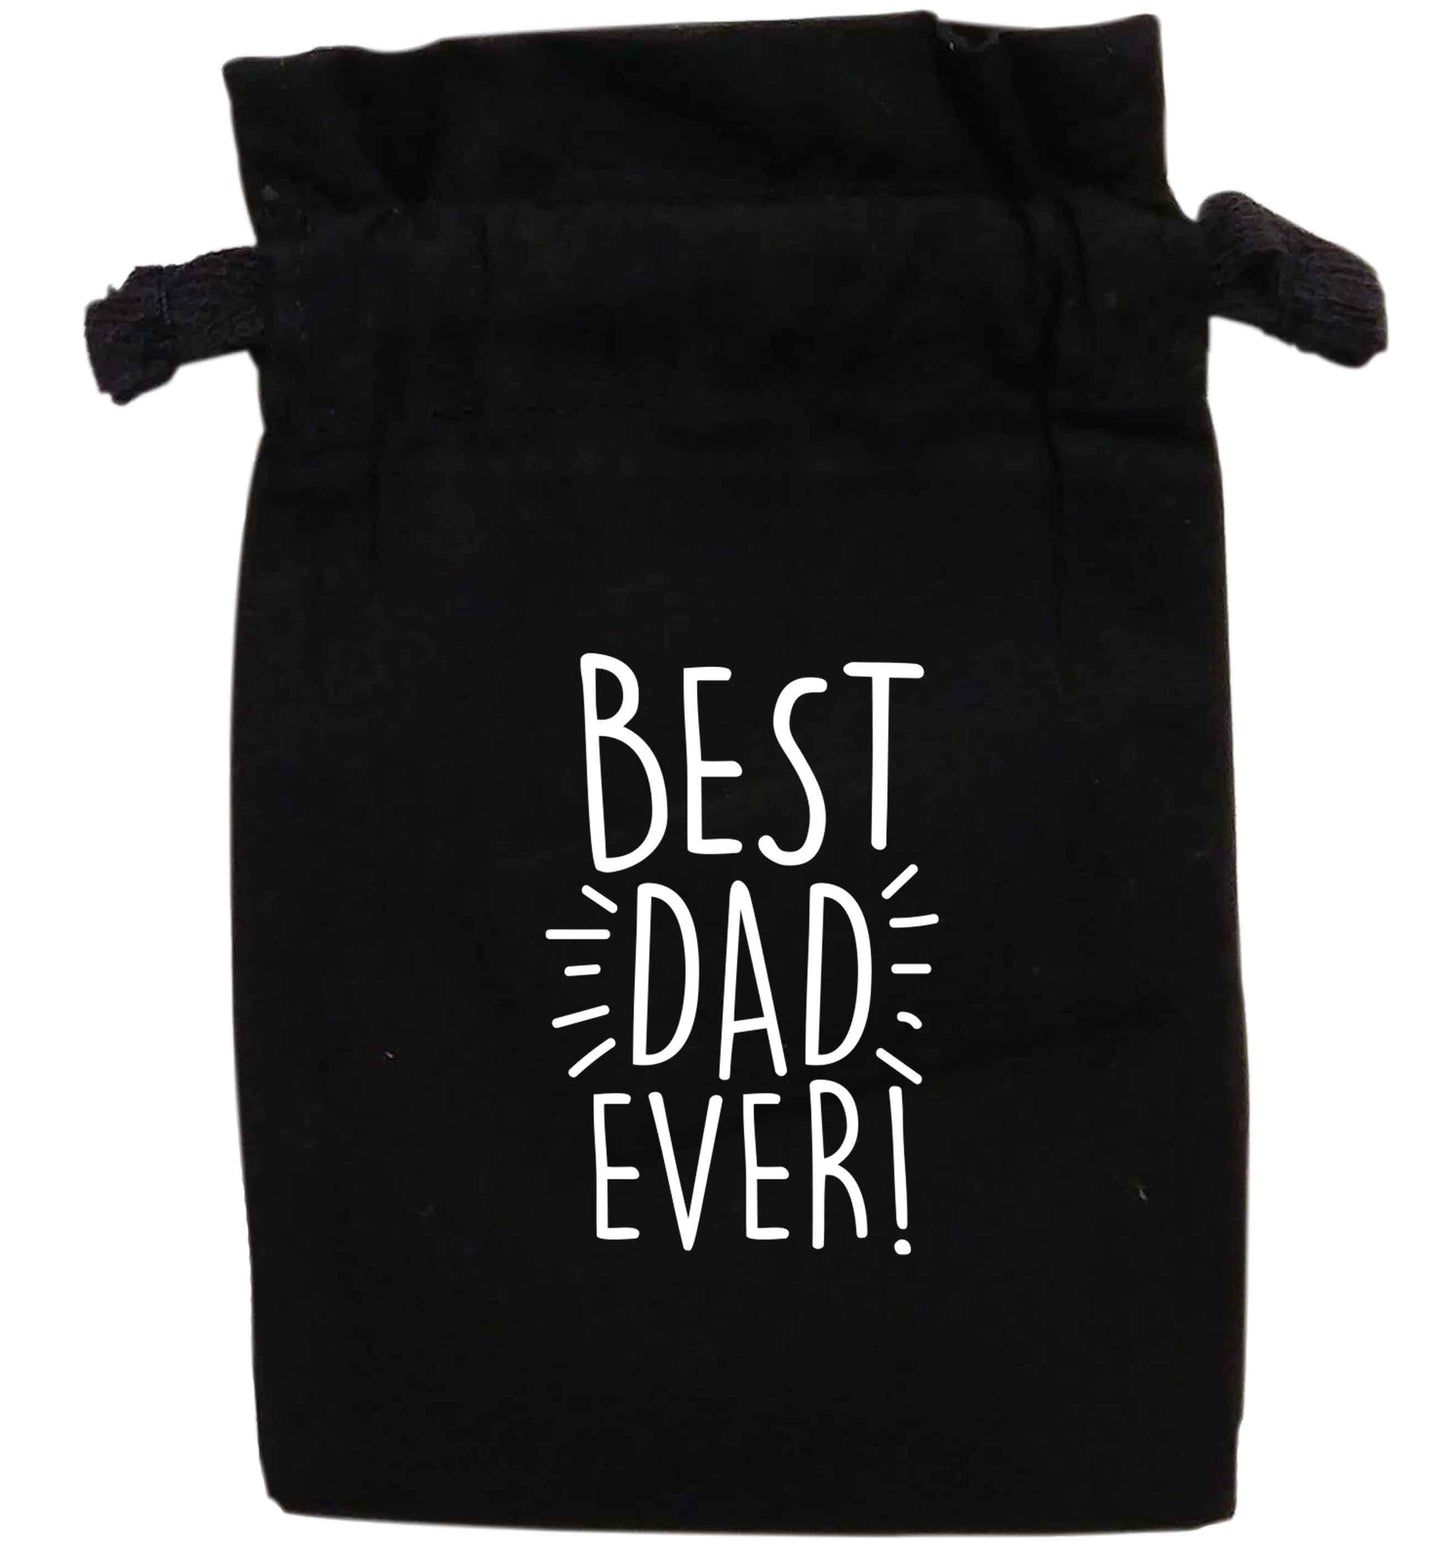 Best dad ever! | XS - L | Pouch / Drawstring bag / Sack | Organic Cotton | Bulk discounts available!